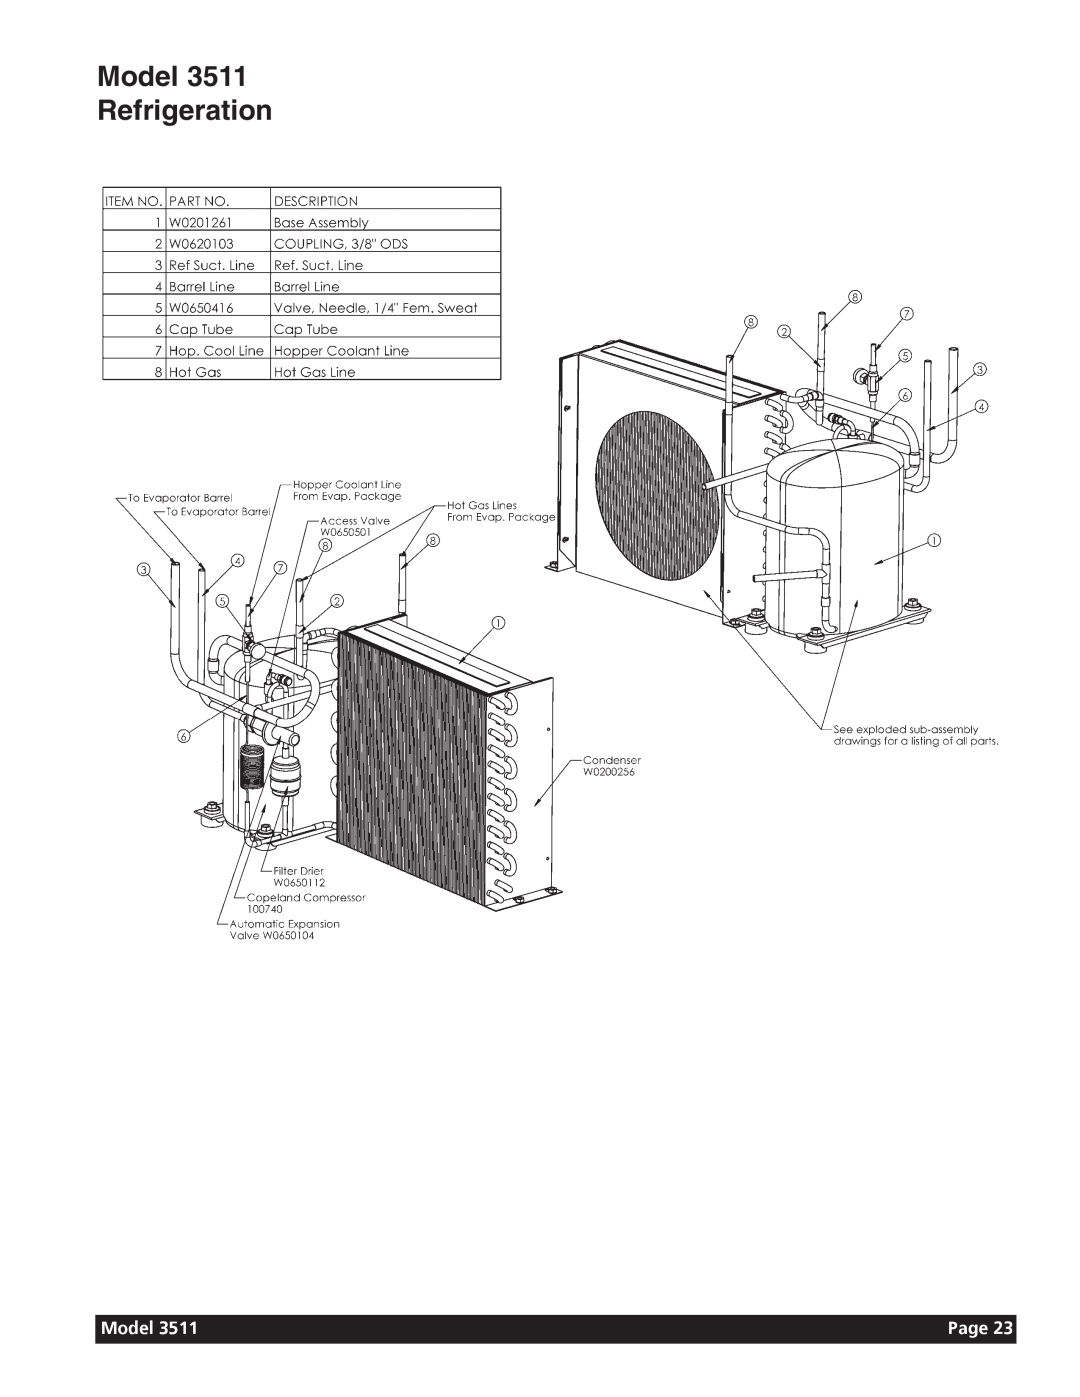 Grindmaster manual Model 3511 Refrigeration, Page 